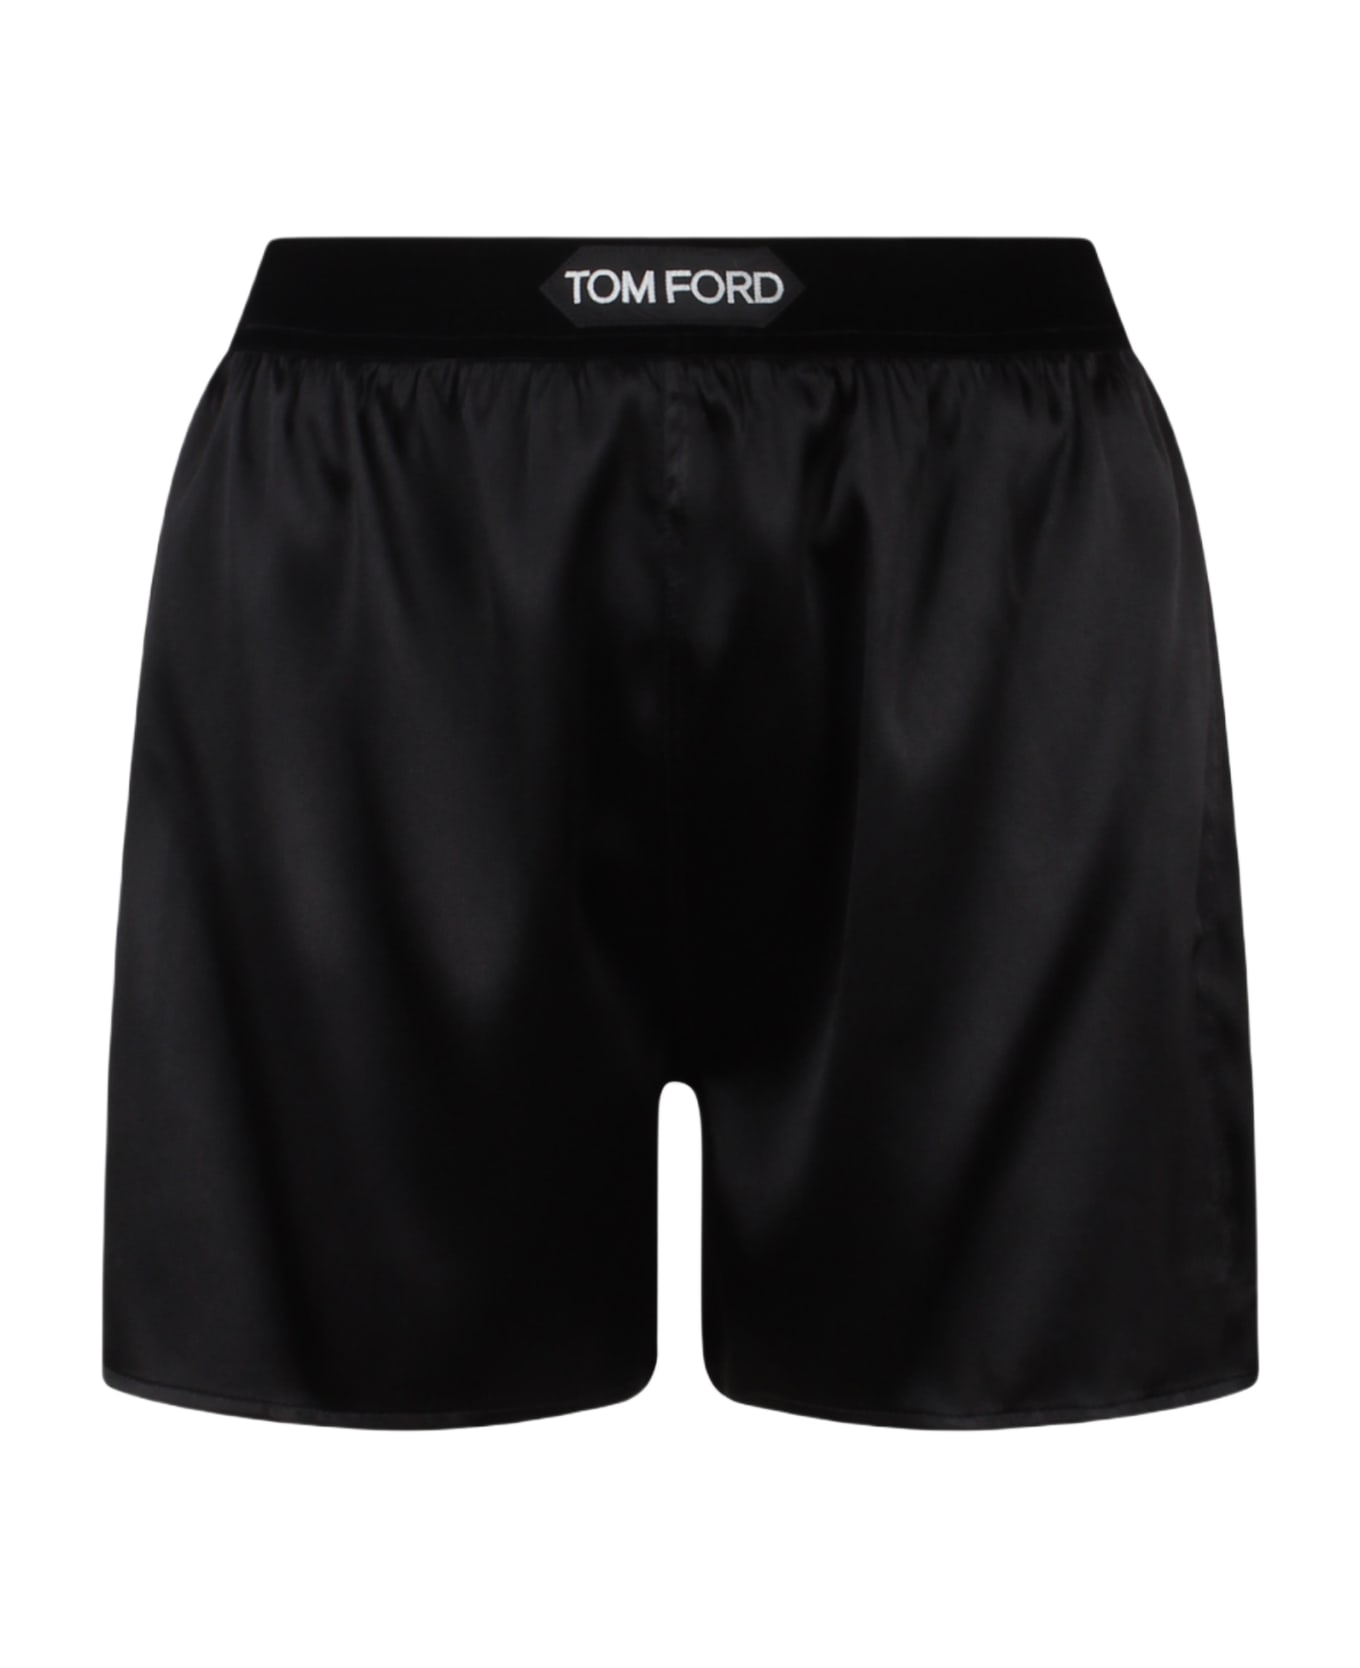 Tom Ford Stretch Silk Satin Boxer Shorts - Black